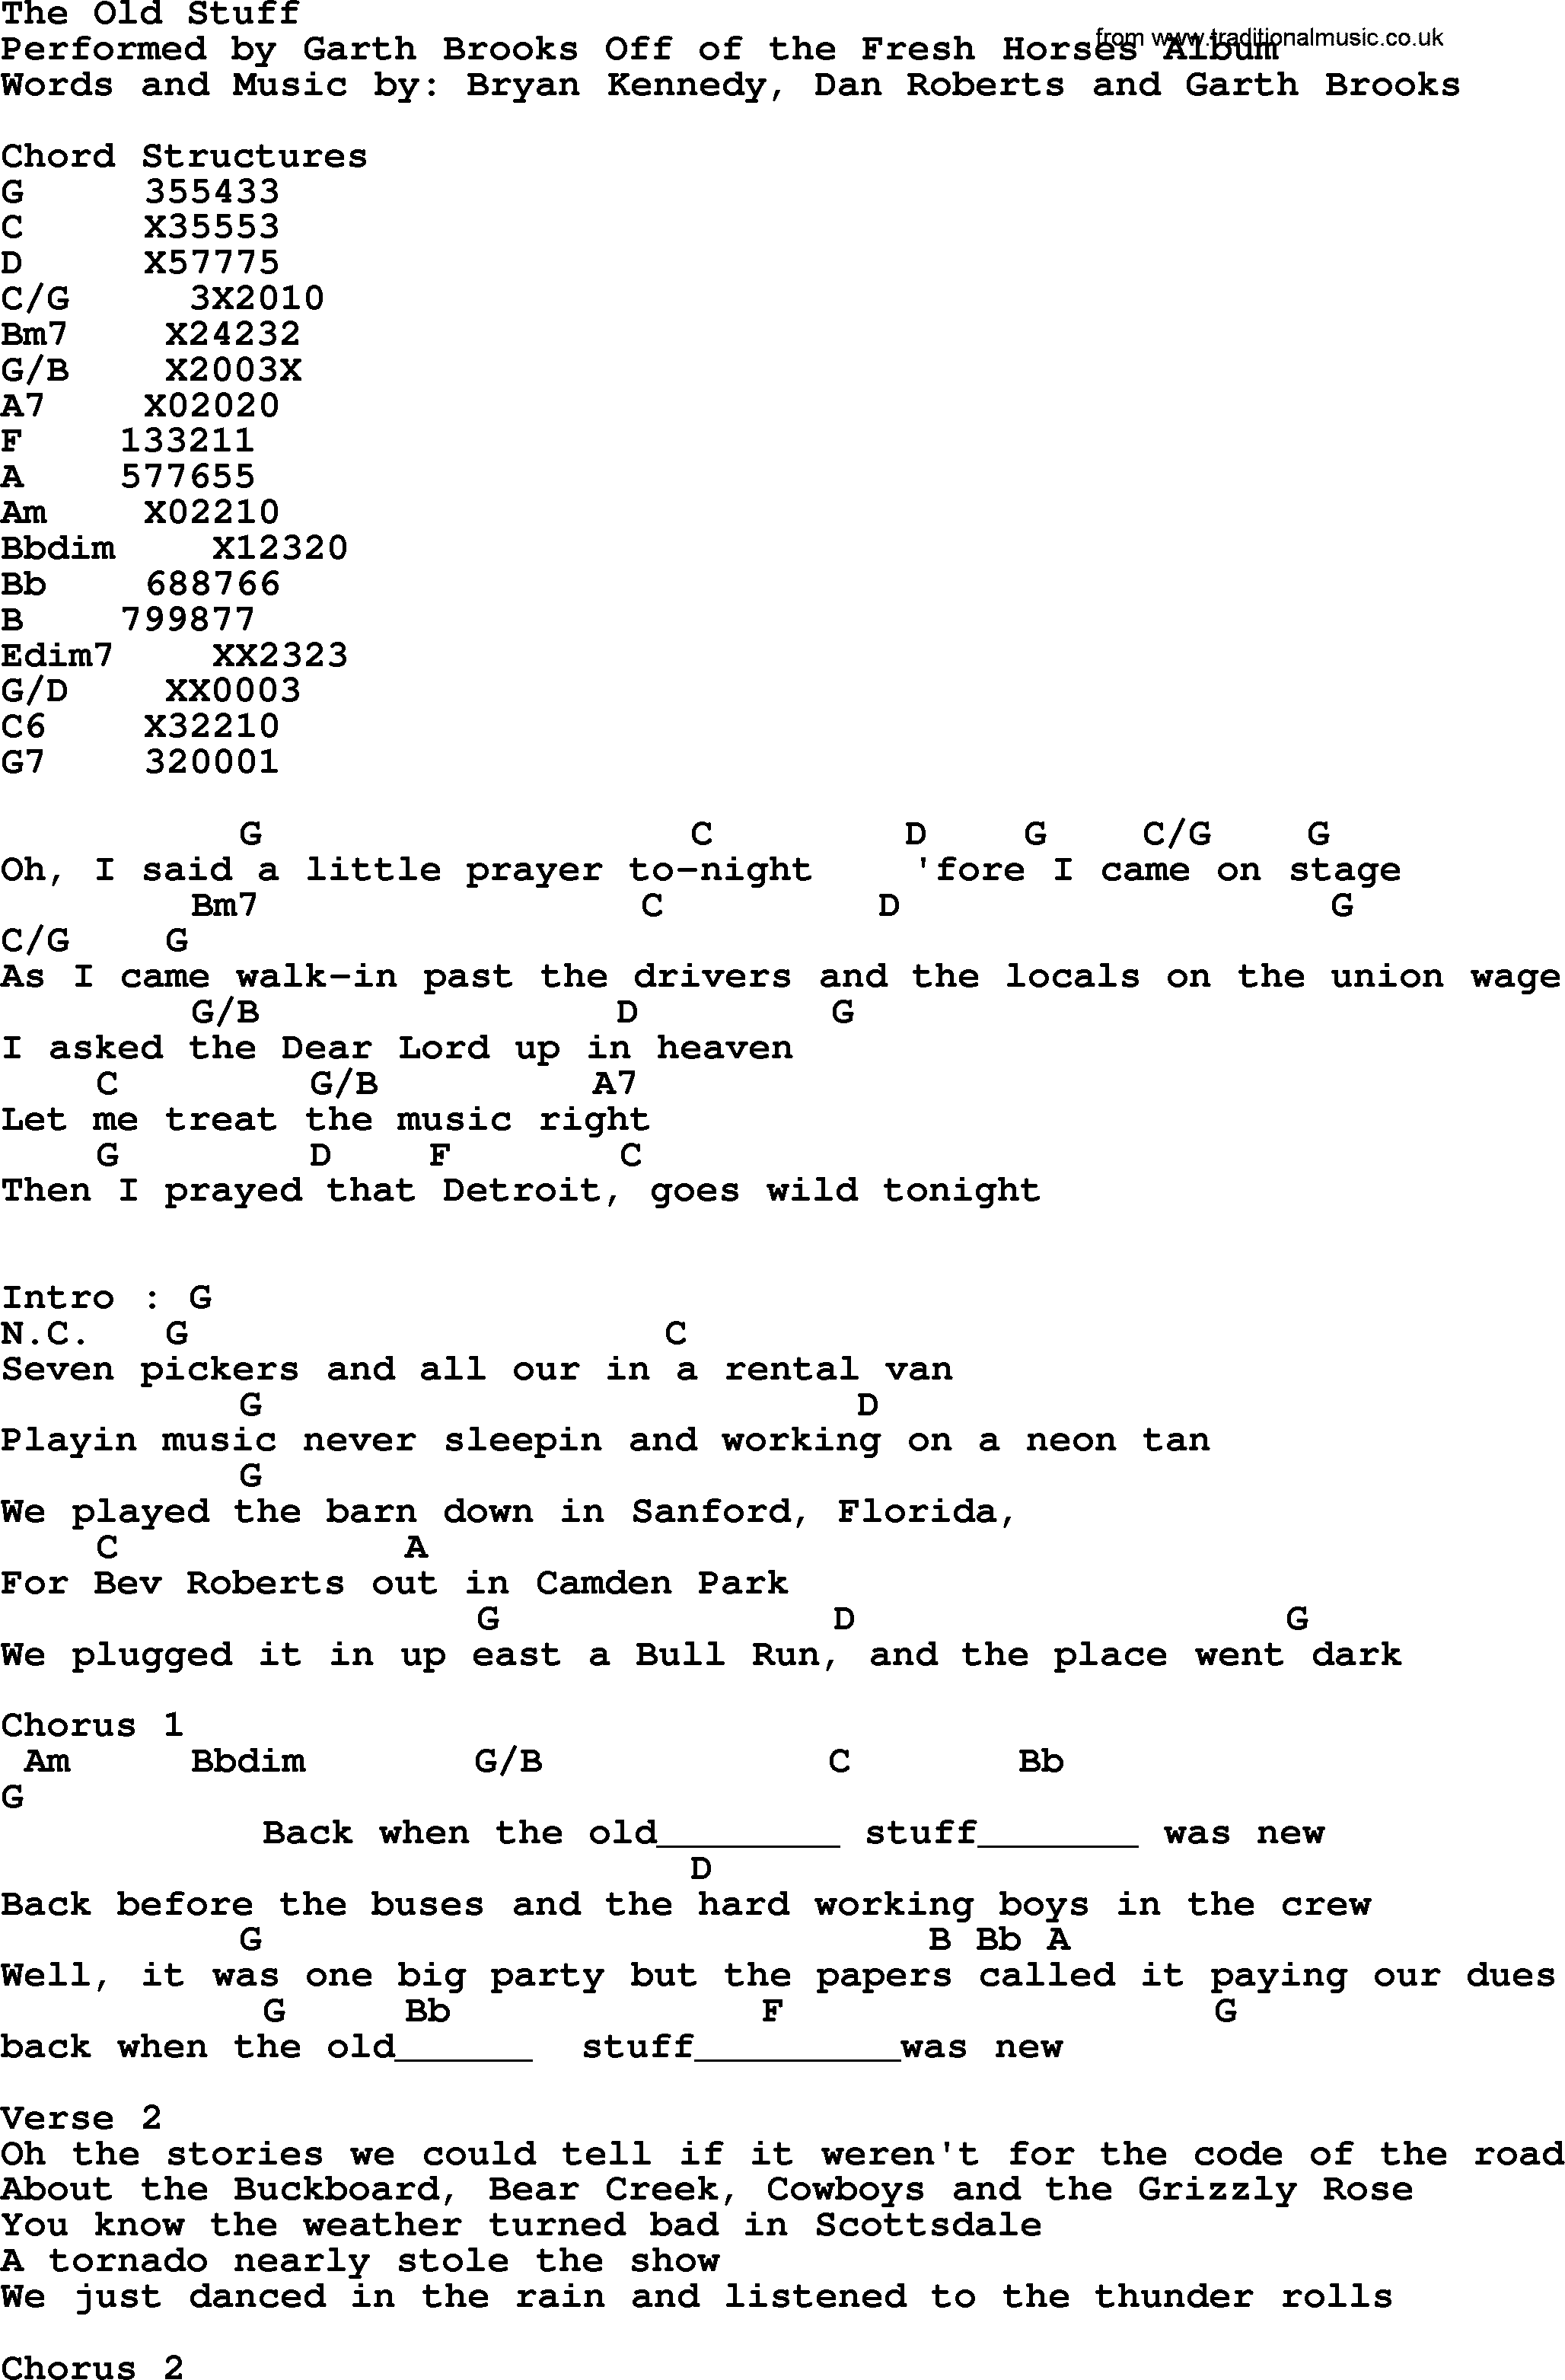 Garth Brooks song: The Old Stuff, lyrics and chords